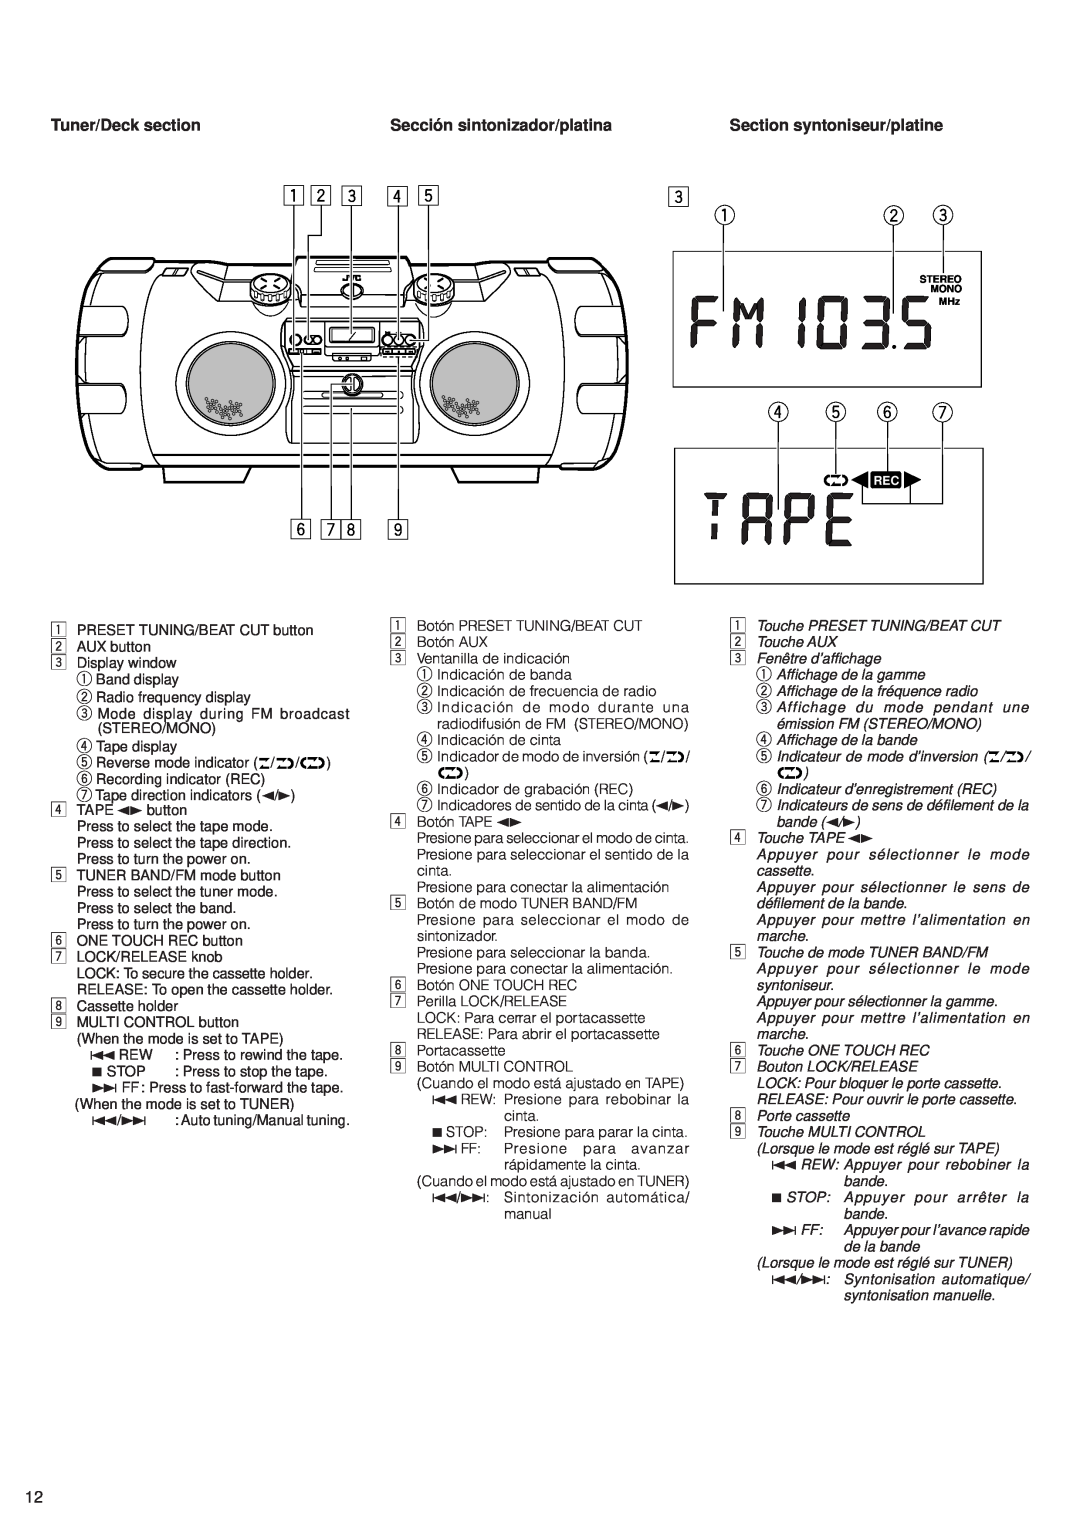 JVC RV-B99 manual 6 78, 4 5 6, 1PRESET TUNING/BEAT CUT button 2 AUX button 